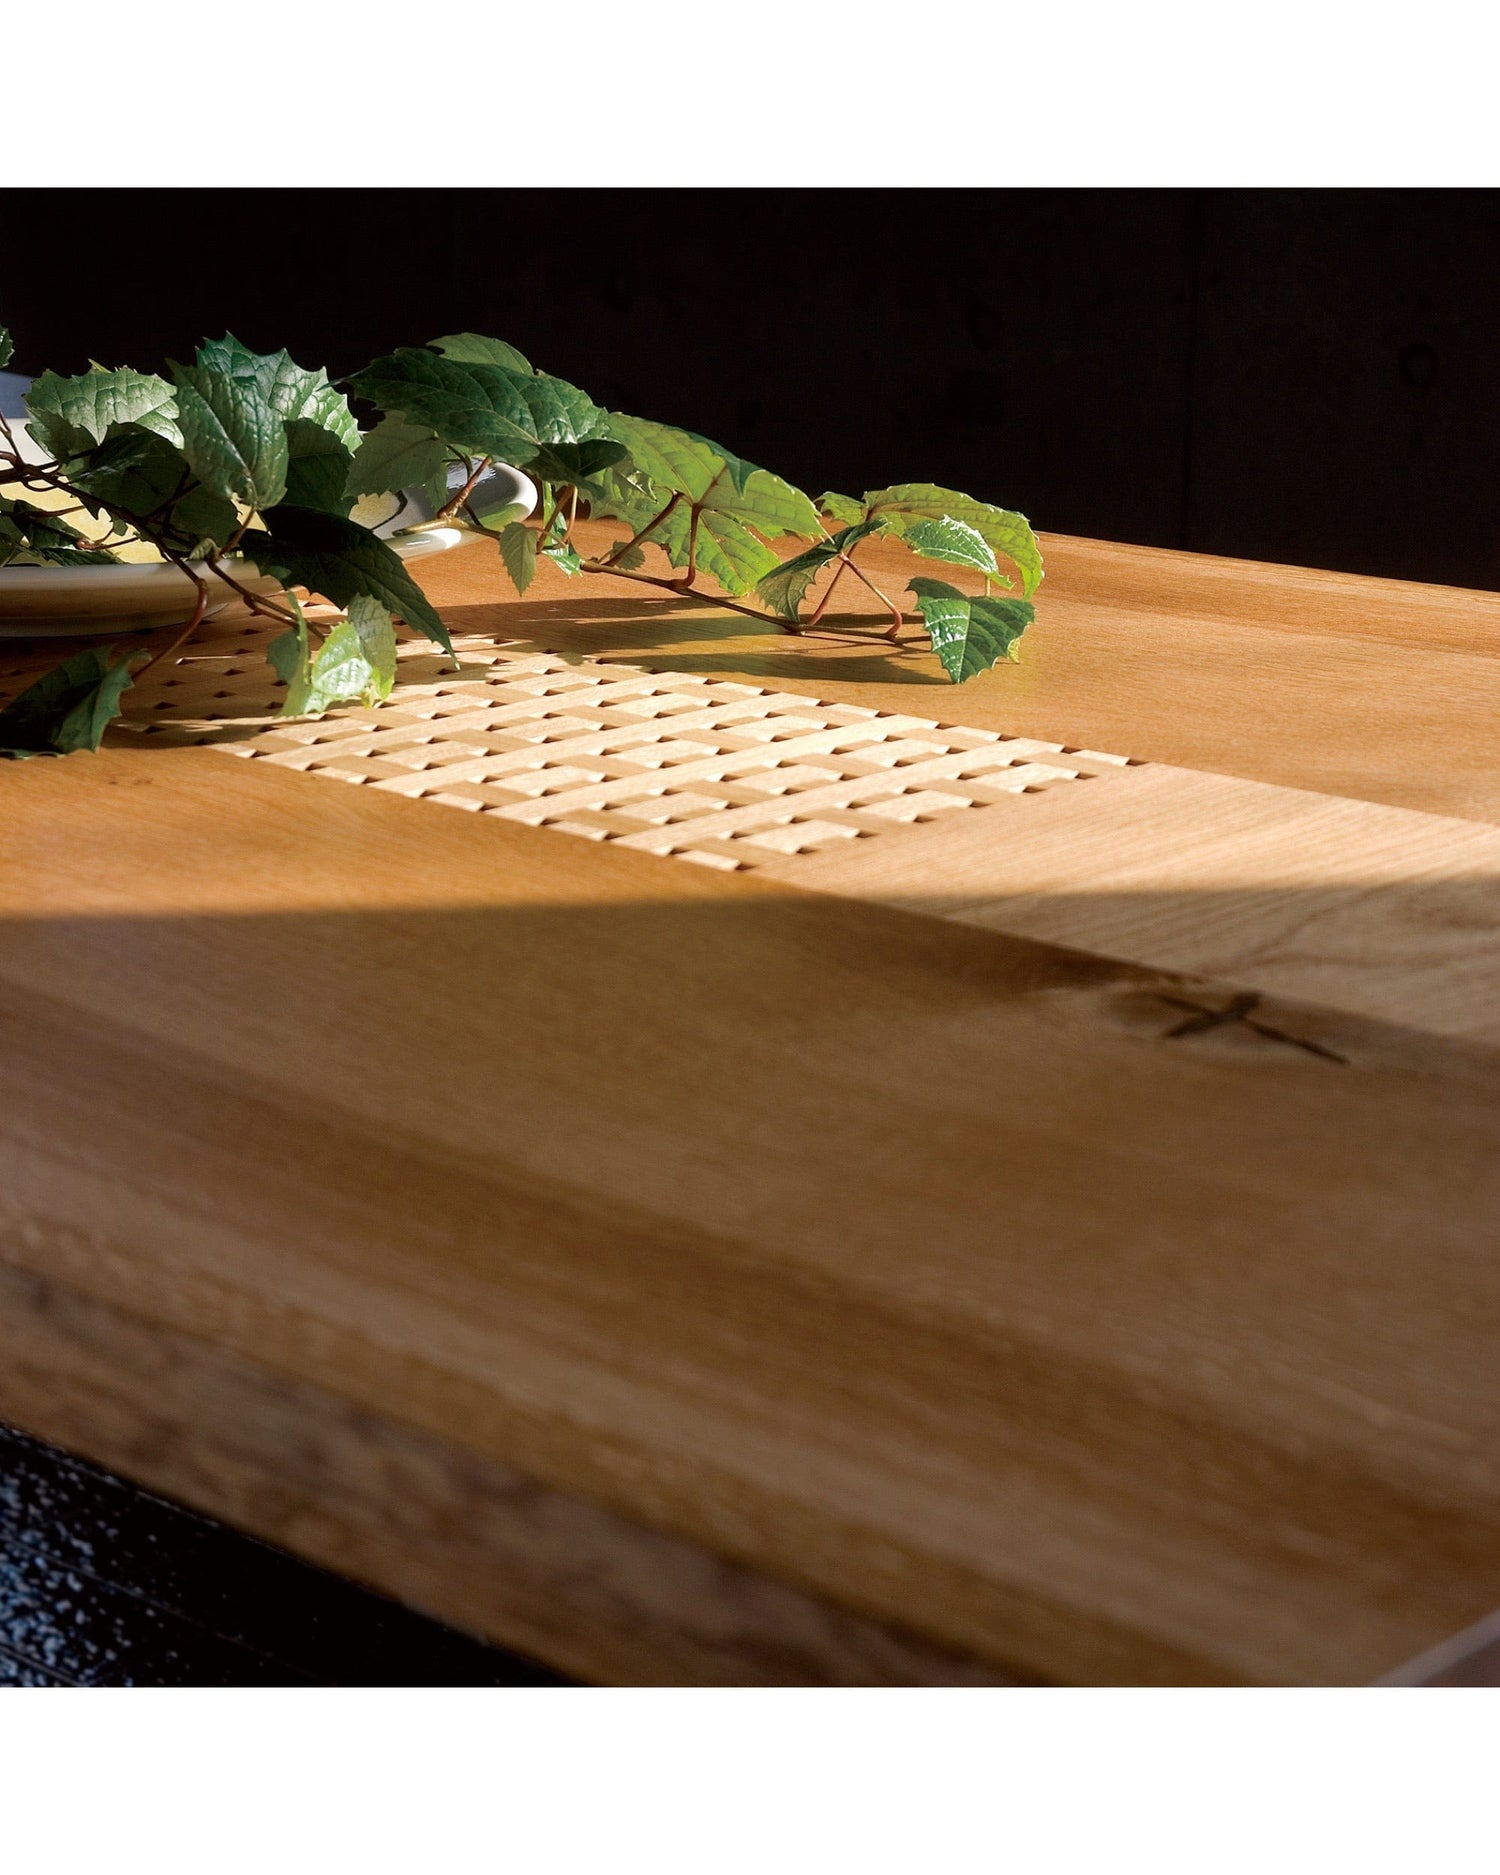 IPPONGI Kiori Table by CondeHouse